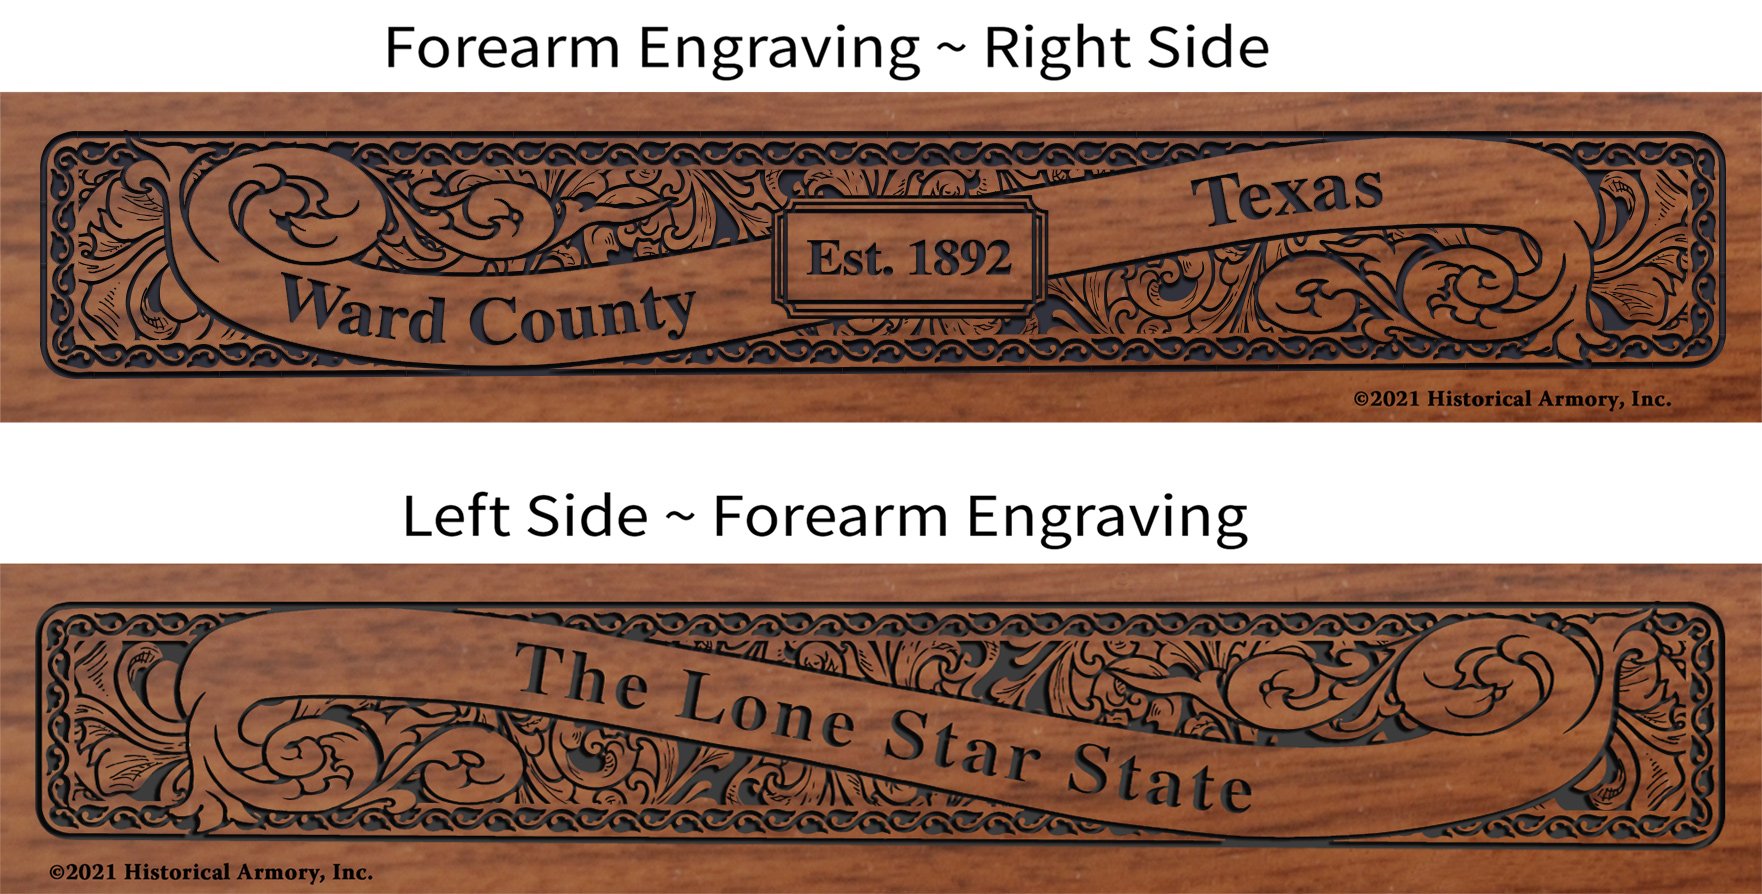 Ward County Texas Establishment and Motto History Engraved Rifle Forearm